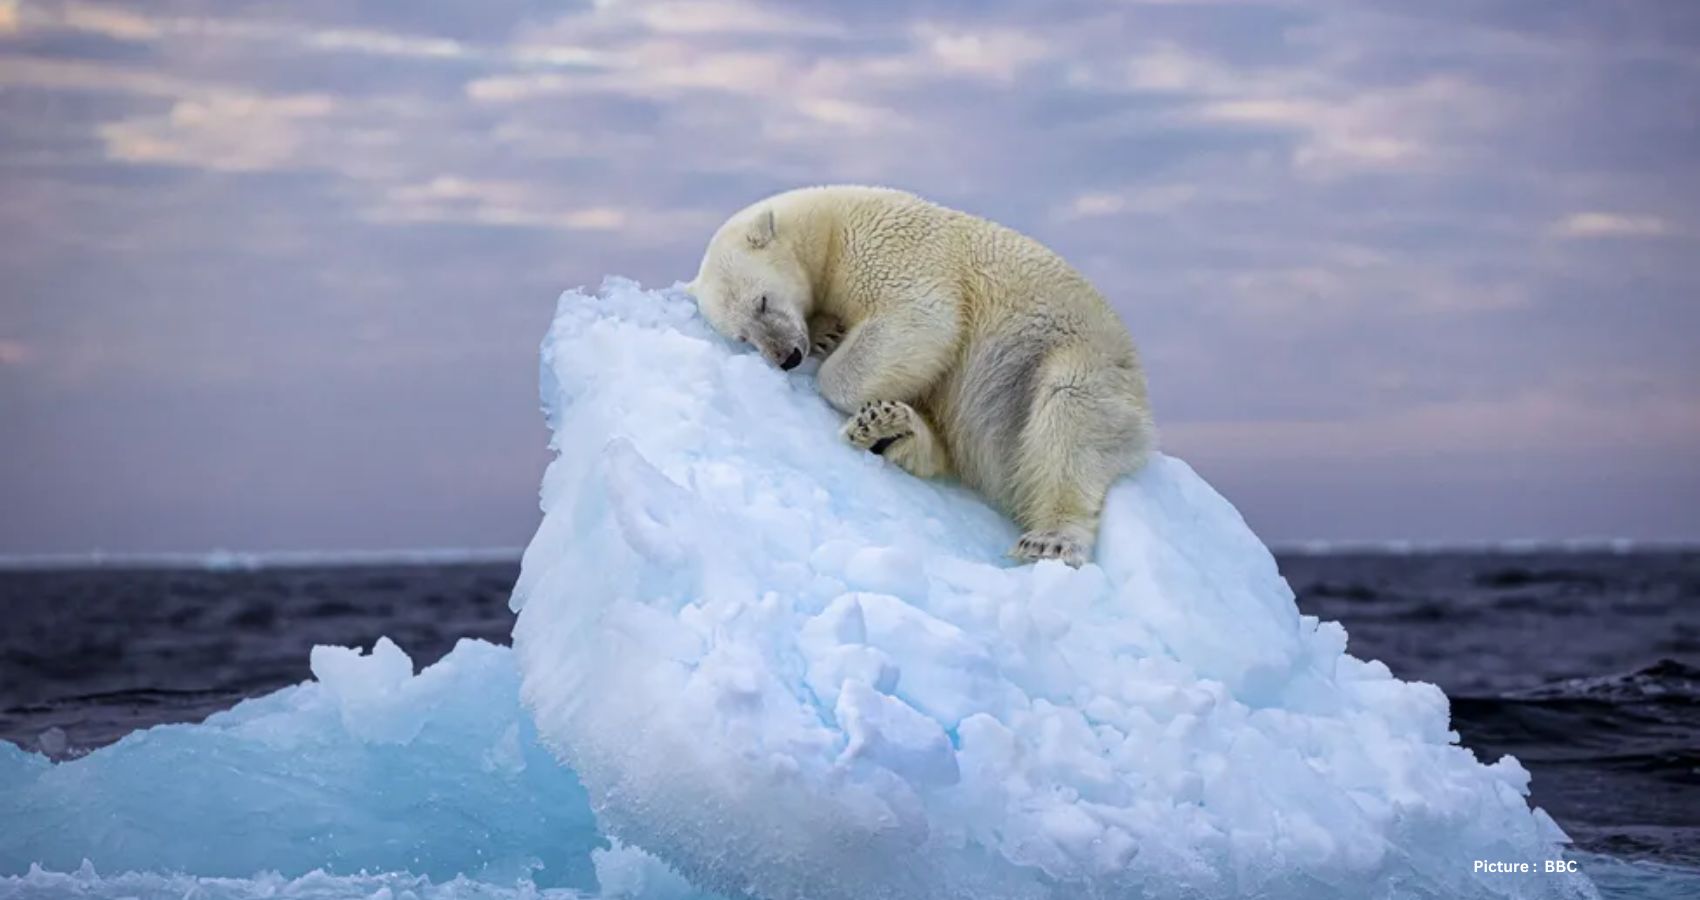 Winning Wildlife: Polar Bear Slumber Image Clinches Photographer of the Year